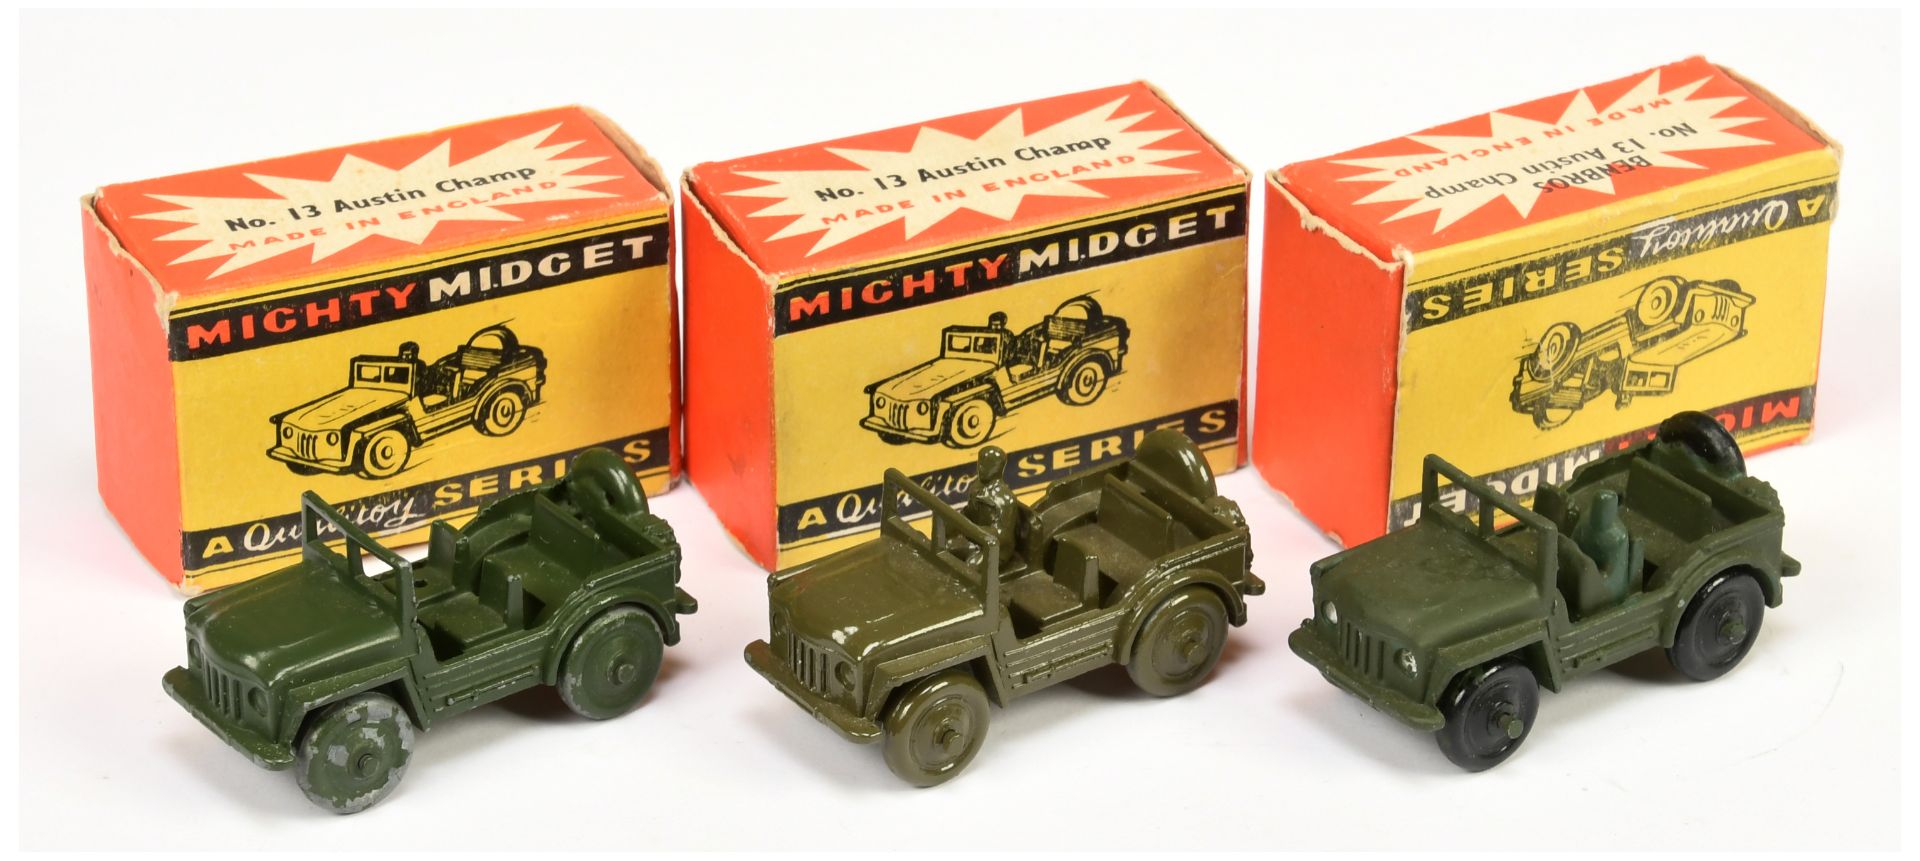 Benbros "Mighty Midget" series military 13 Austin Champ group of 3 